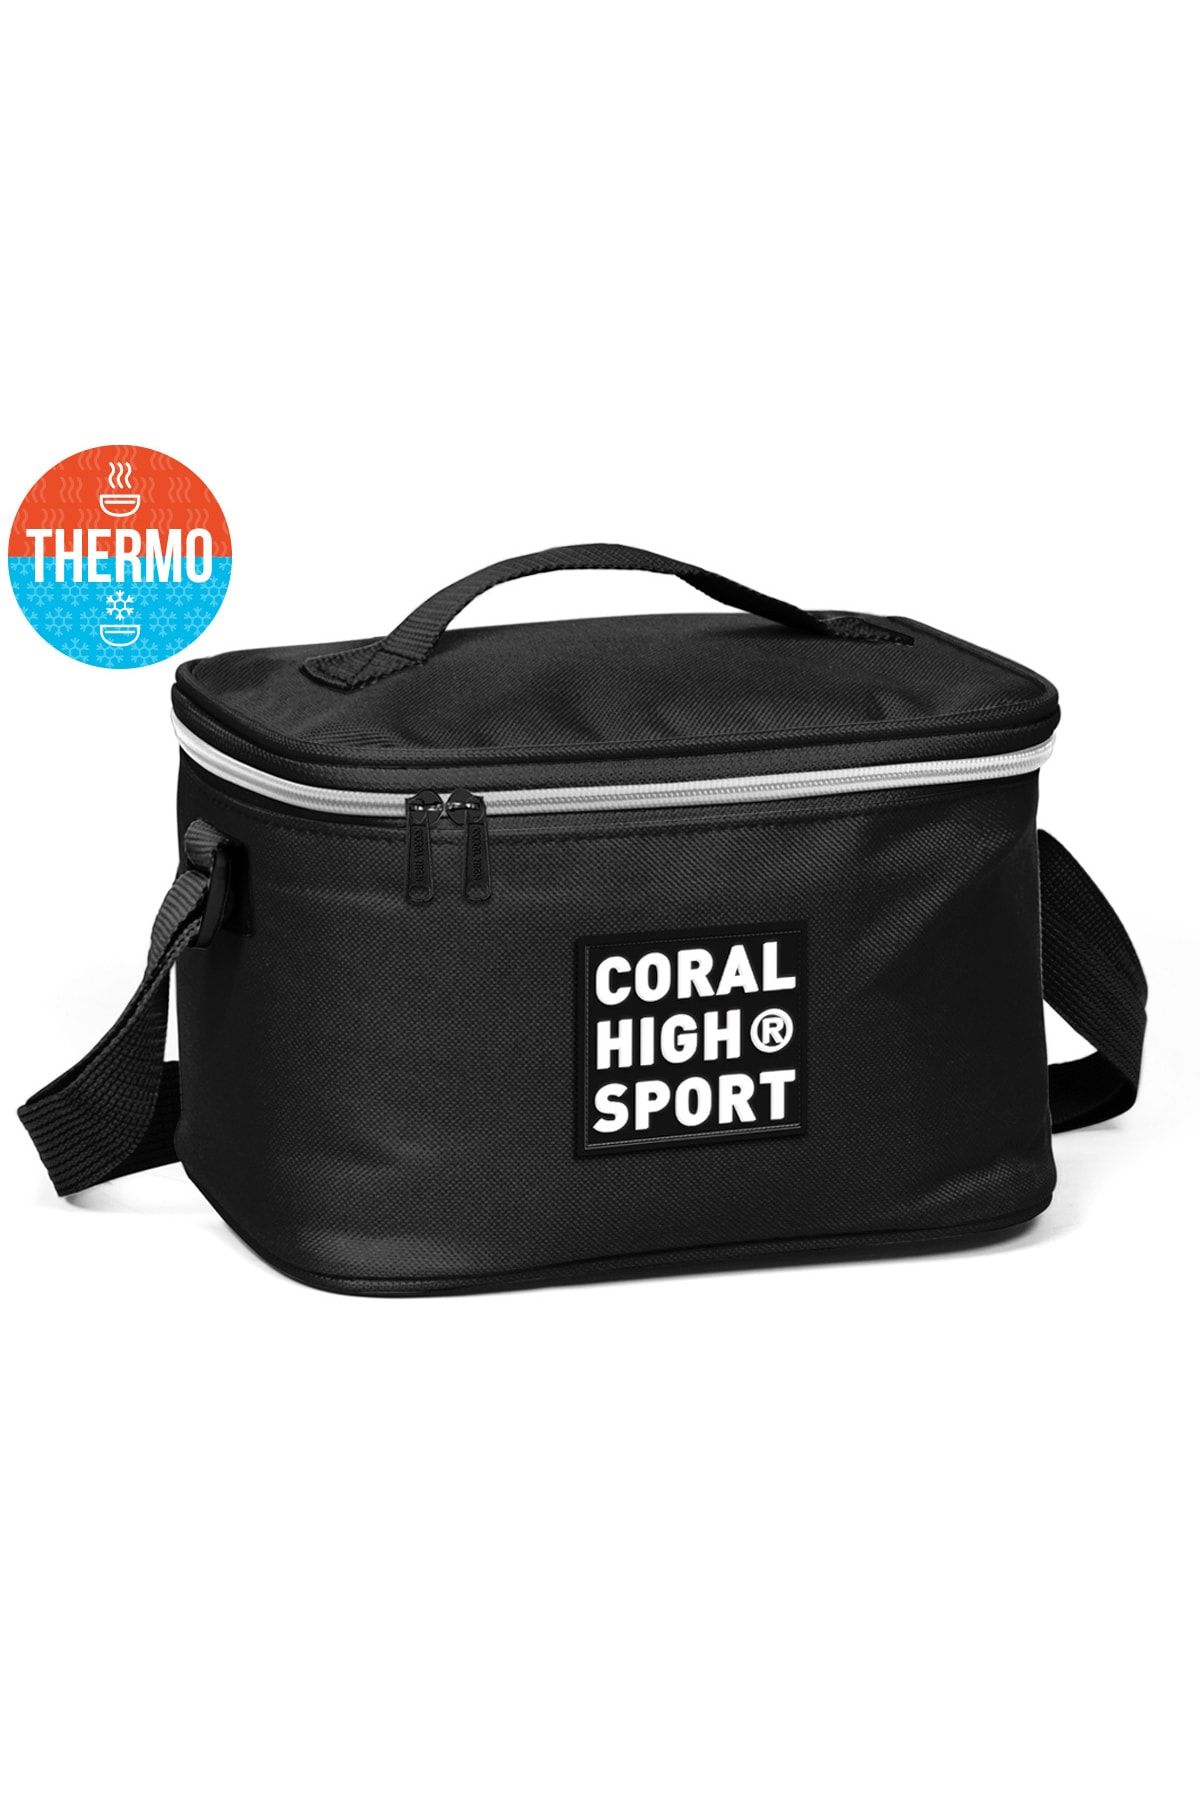 Coral High Sport Siyah Thermo Beslenme Çantası